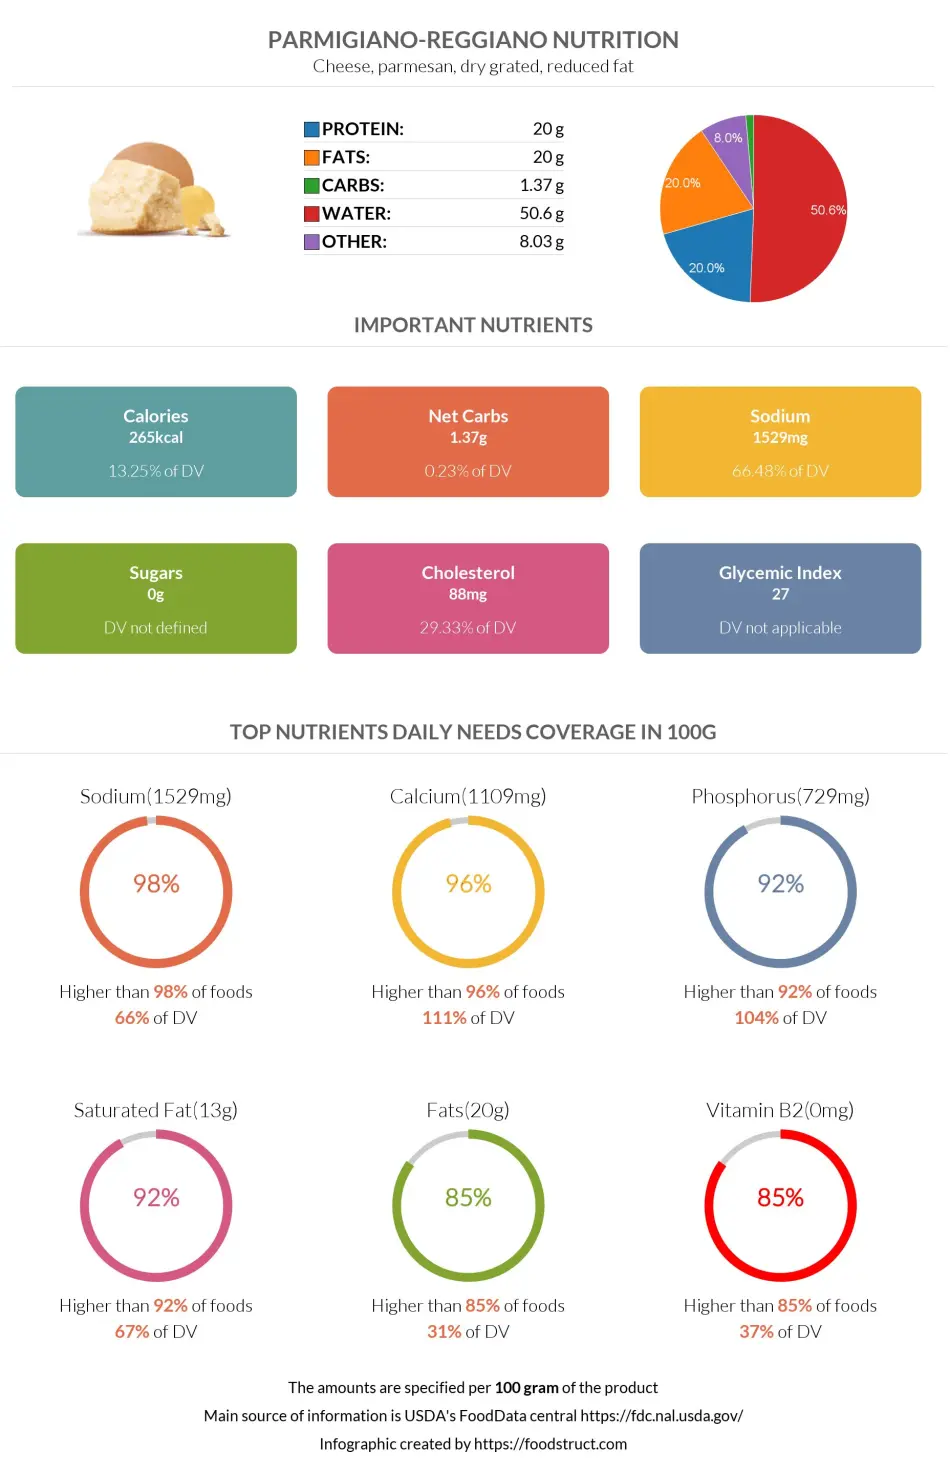 Parmigiano-Reggiano nutrition infographic